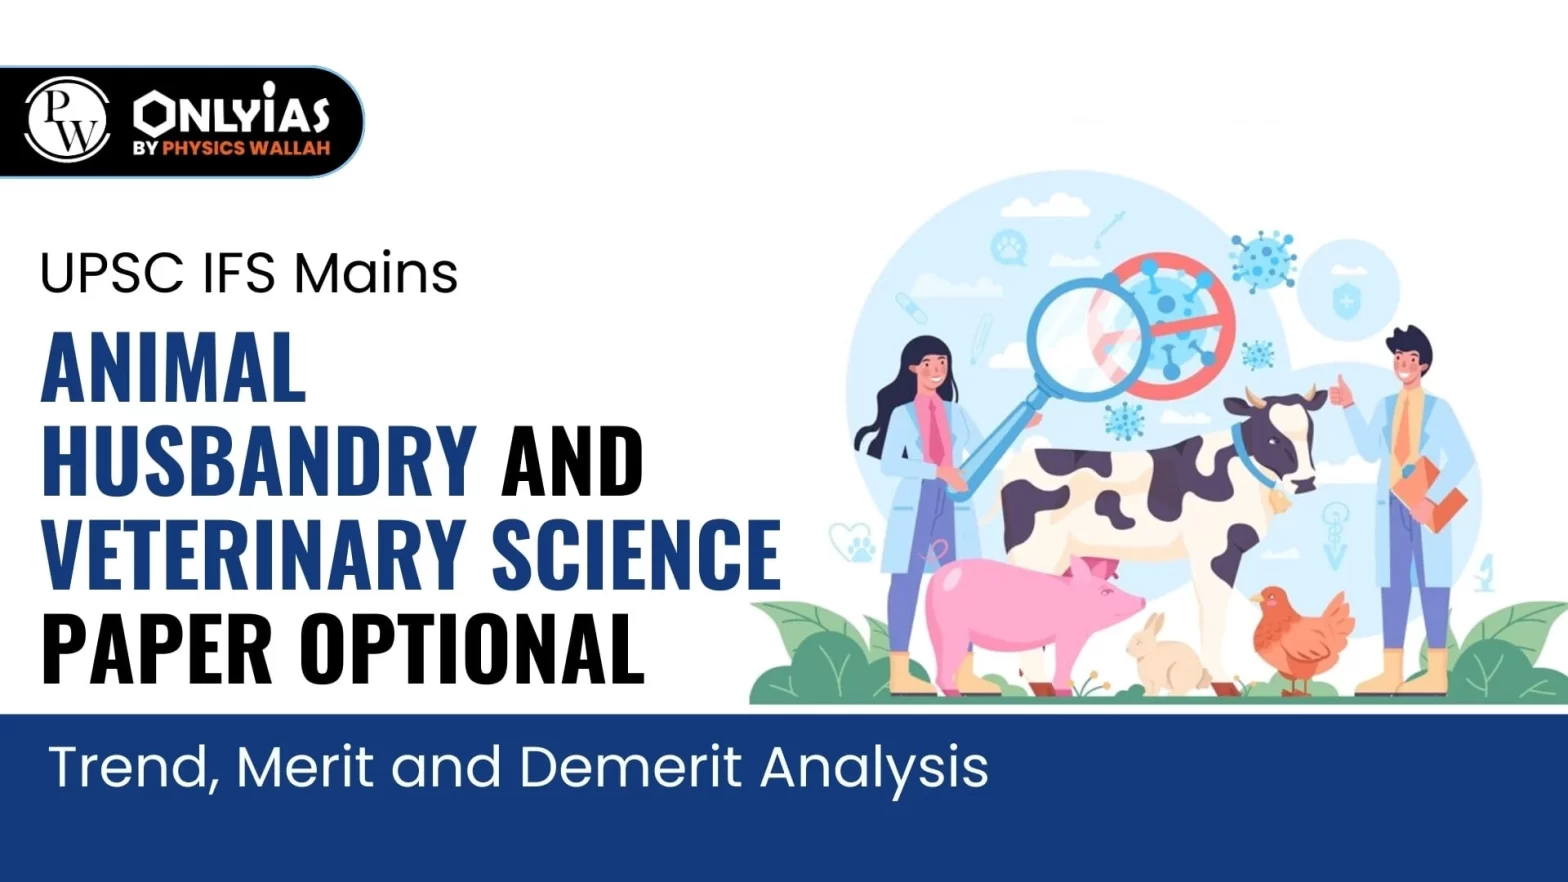 UPSC IFS Mains Animal Husbandry and Veterinary Science Paper Optional: Trend, Merit and Demerit Analysis